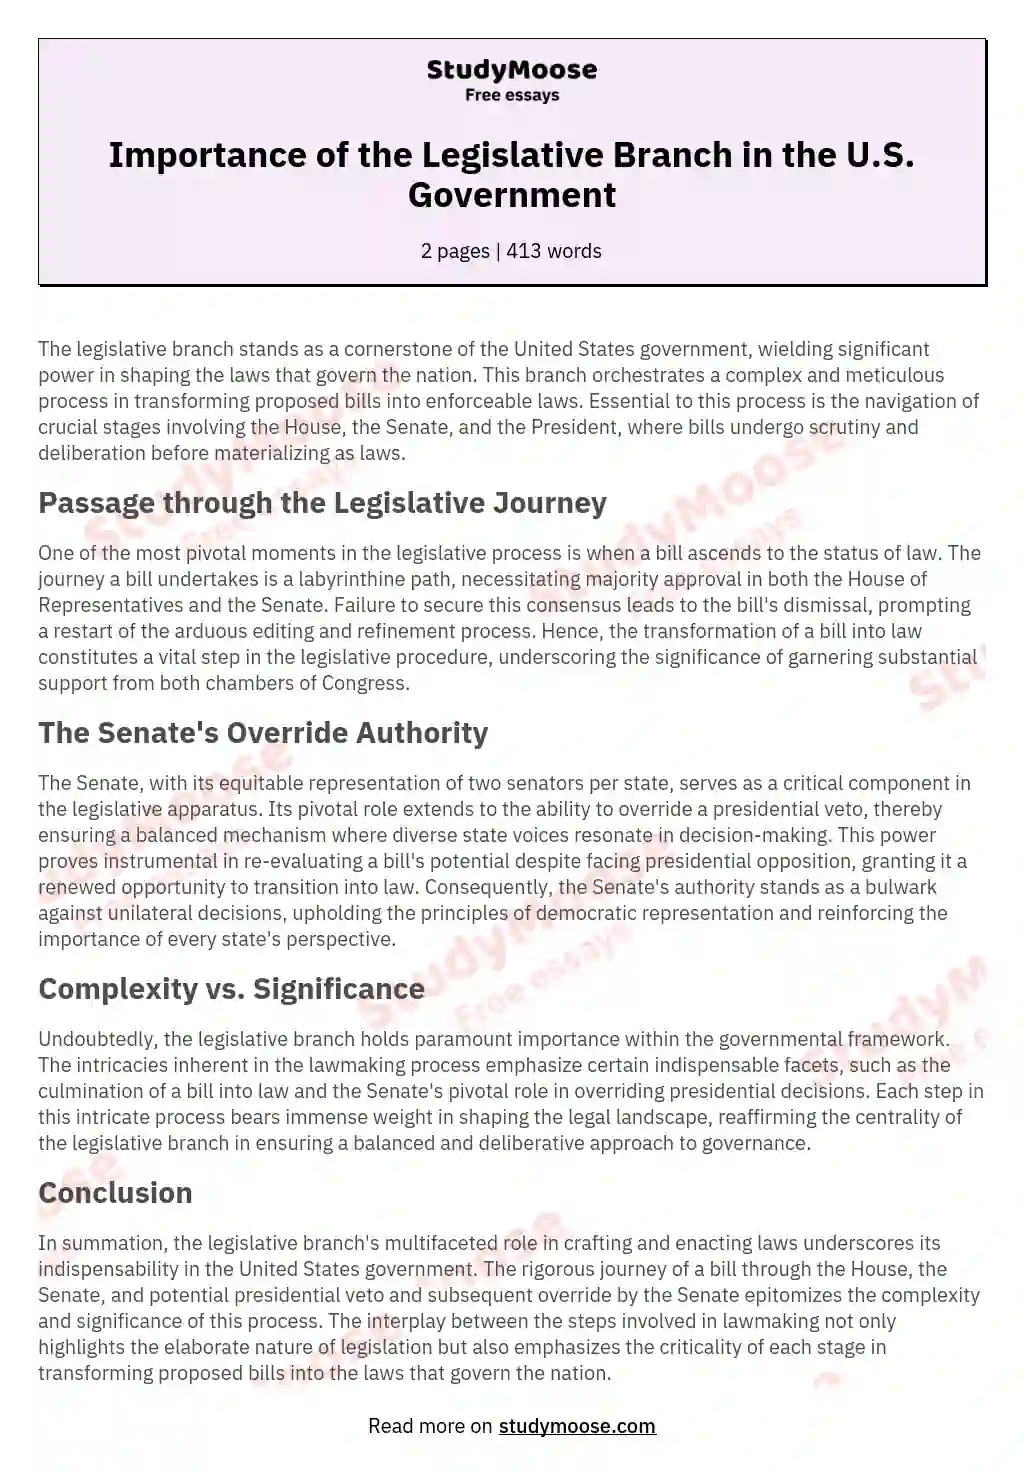 Importance of the Legislative Branch in the U.S. Government essay